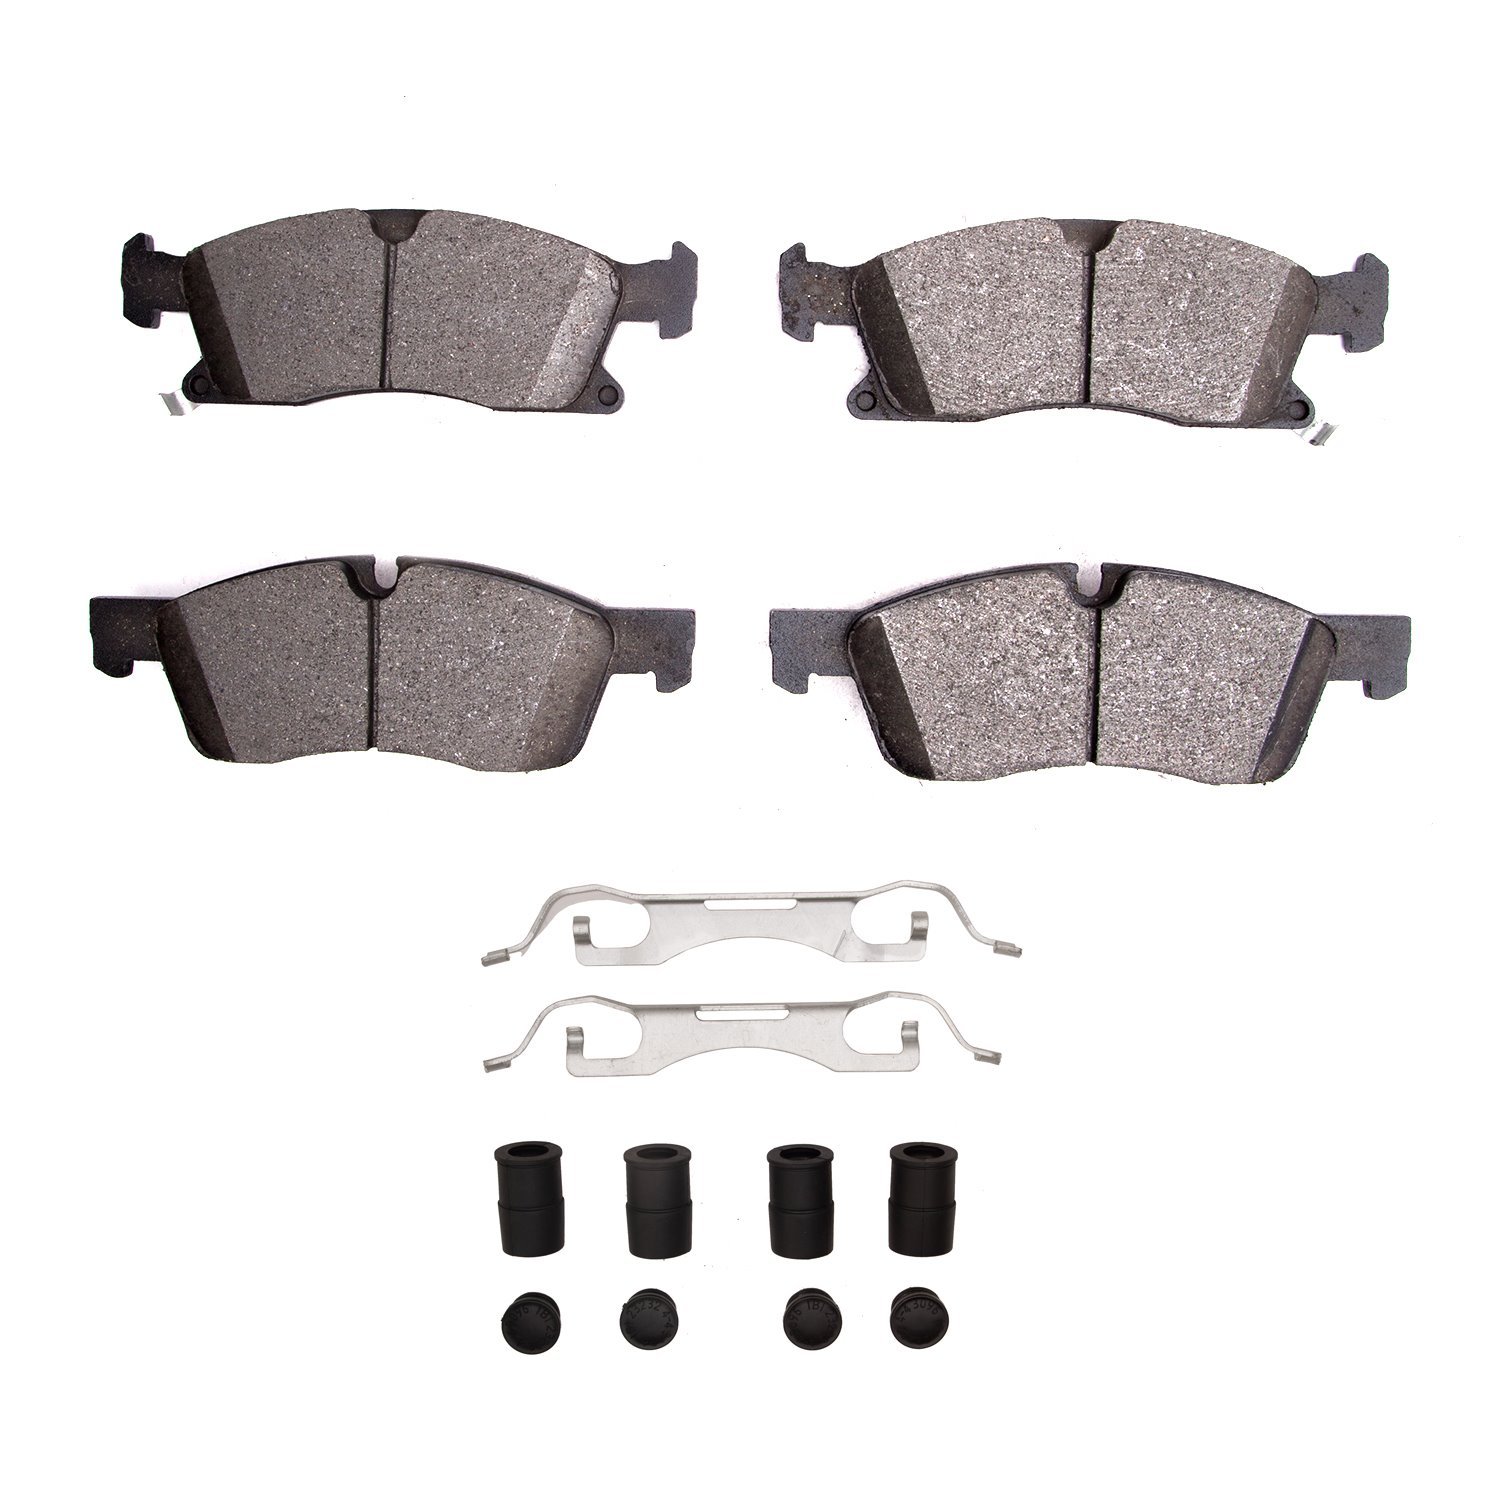 1551-1904-11 5000 Advanced Ceramic Brake Pads & Hardware Kit, Fits Select Multiple Makes/Models, Position: Front